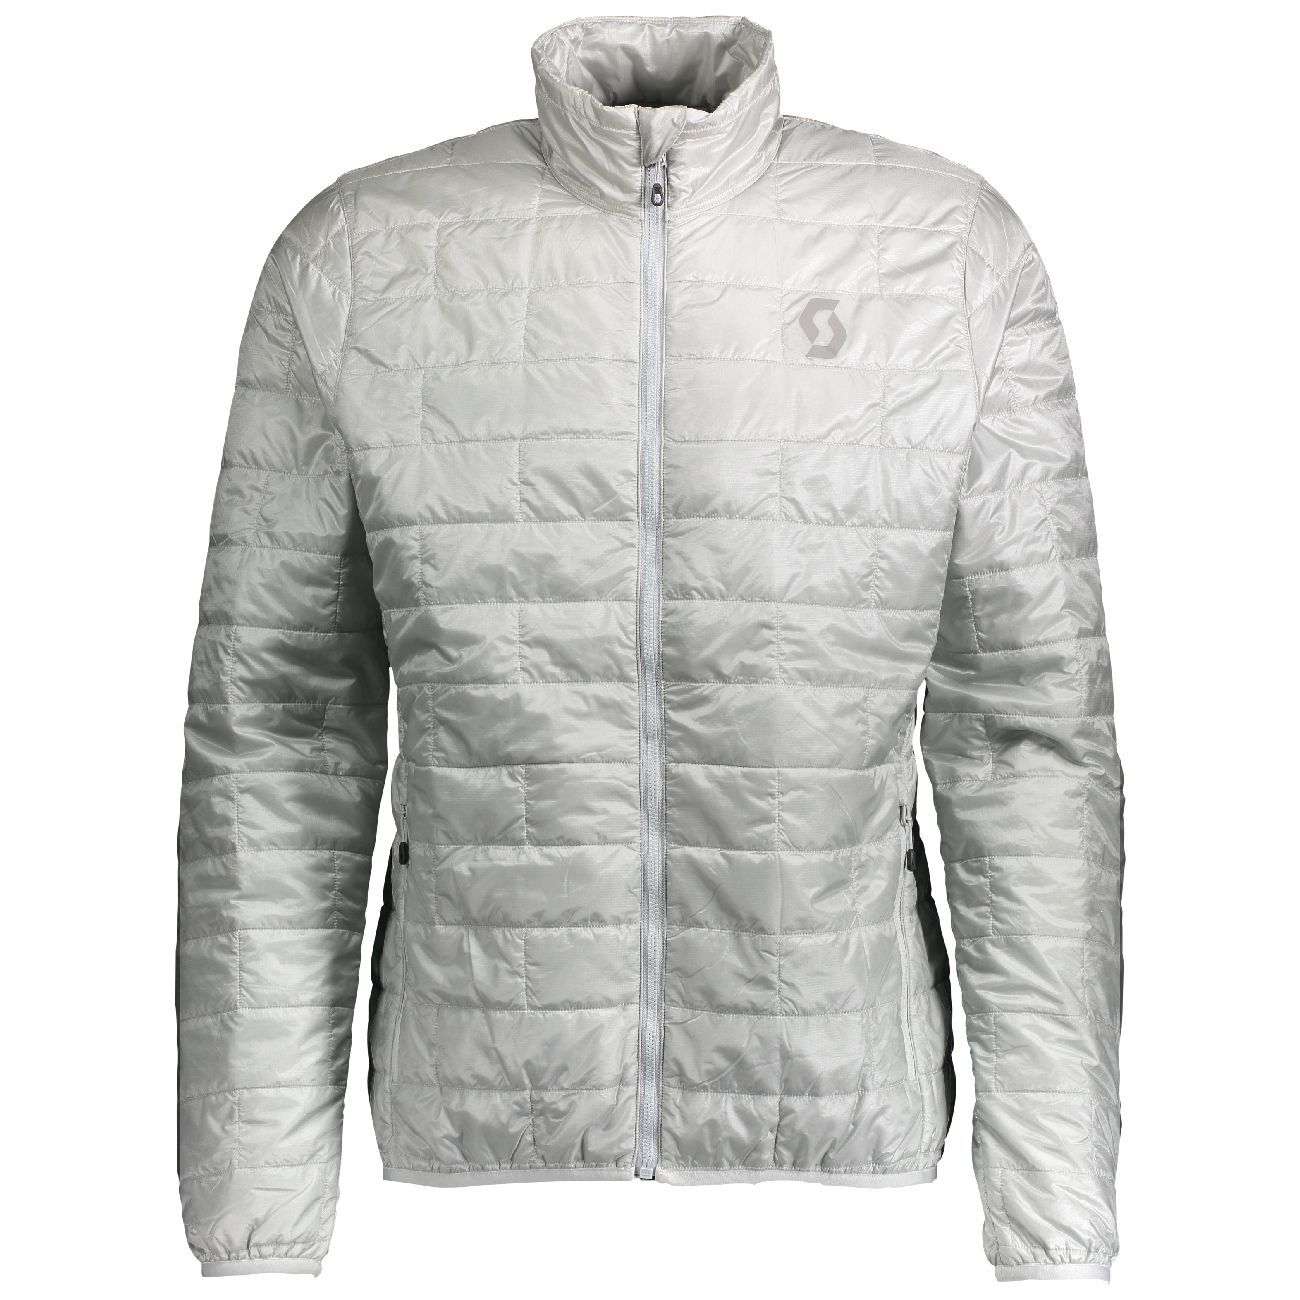 Scott Insuloft Superlight PL Jacket - Synthetic jacket - Men's